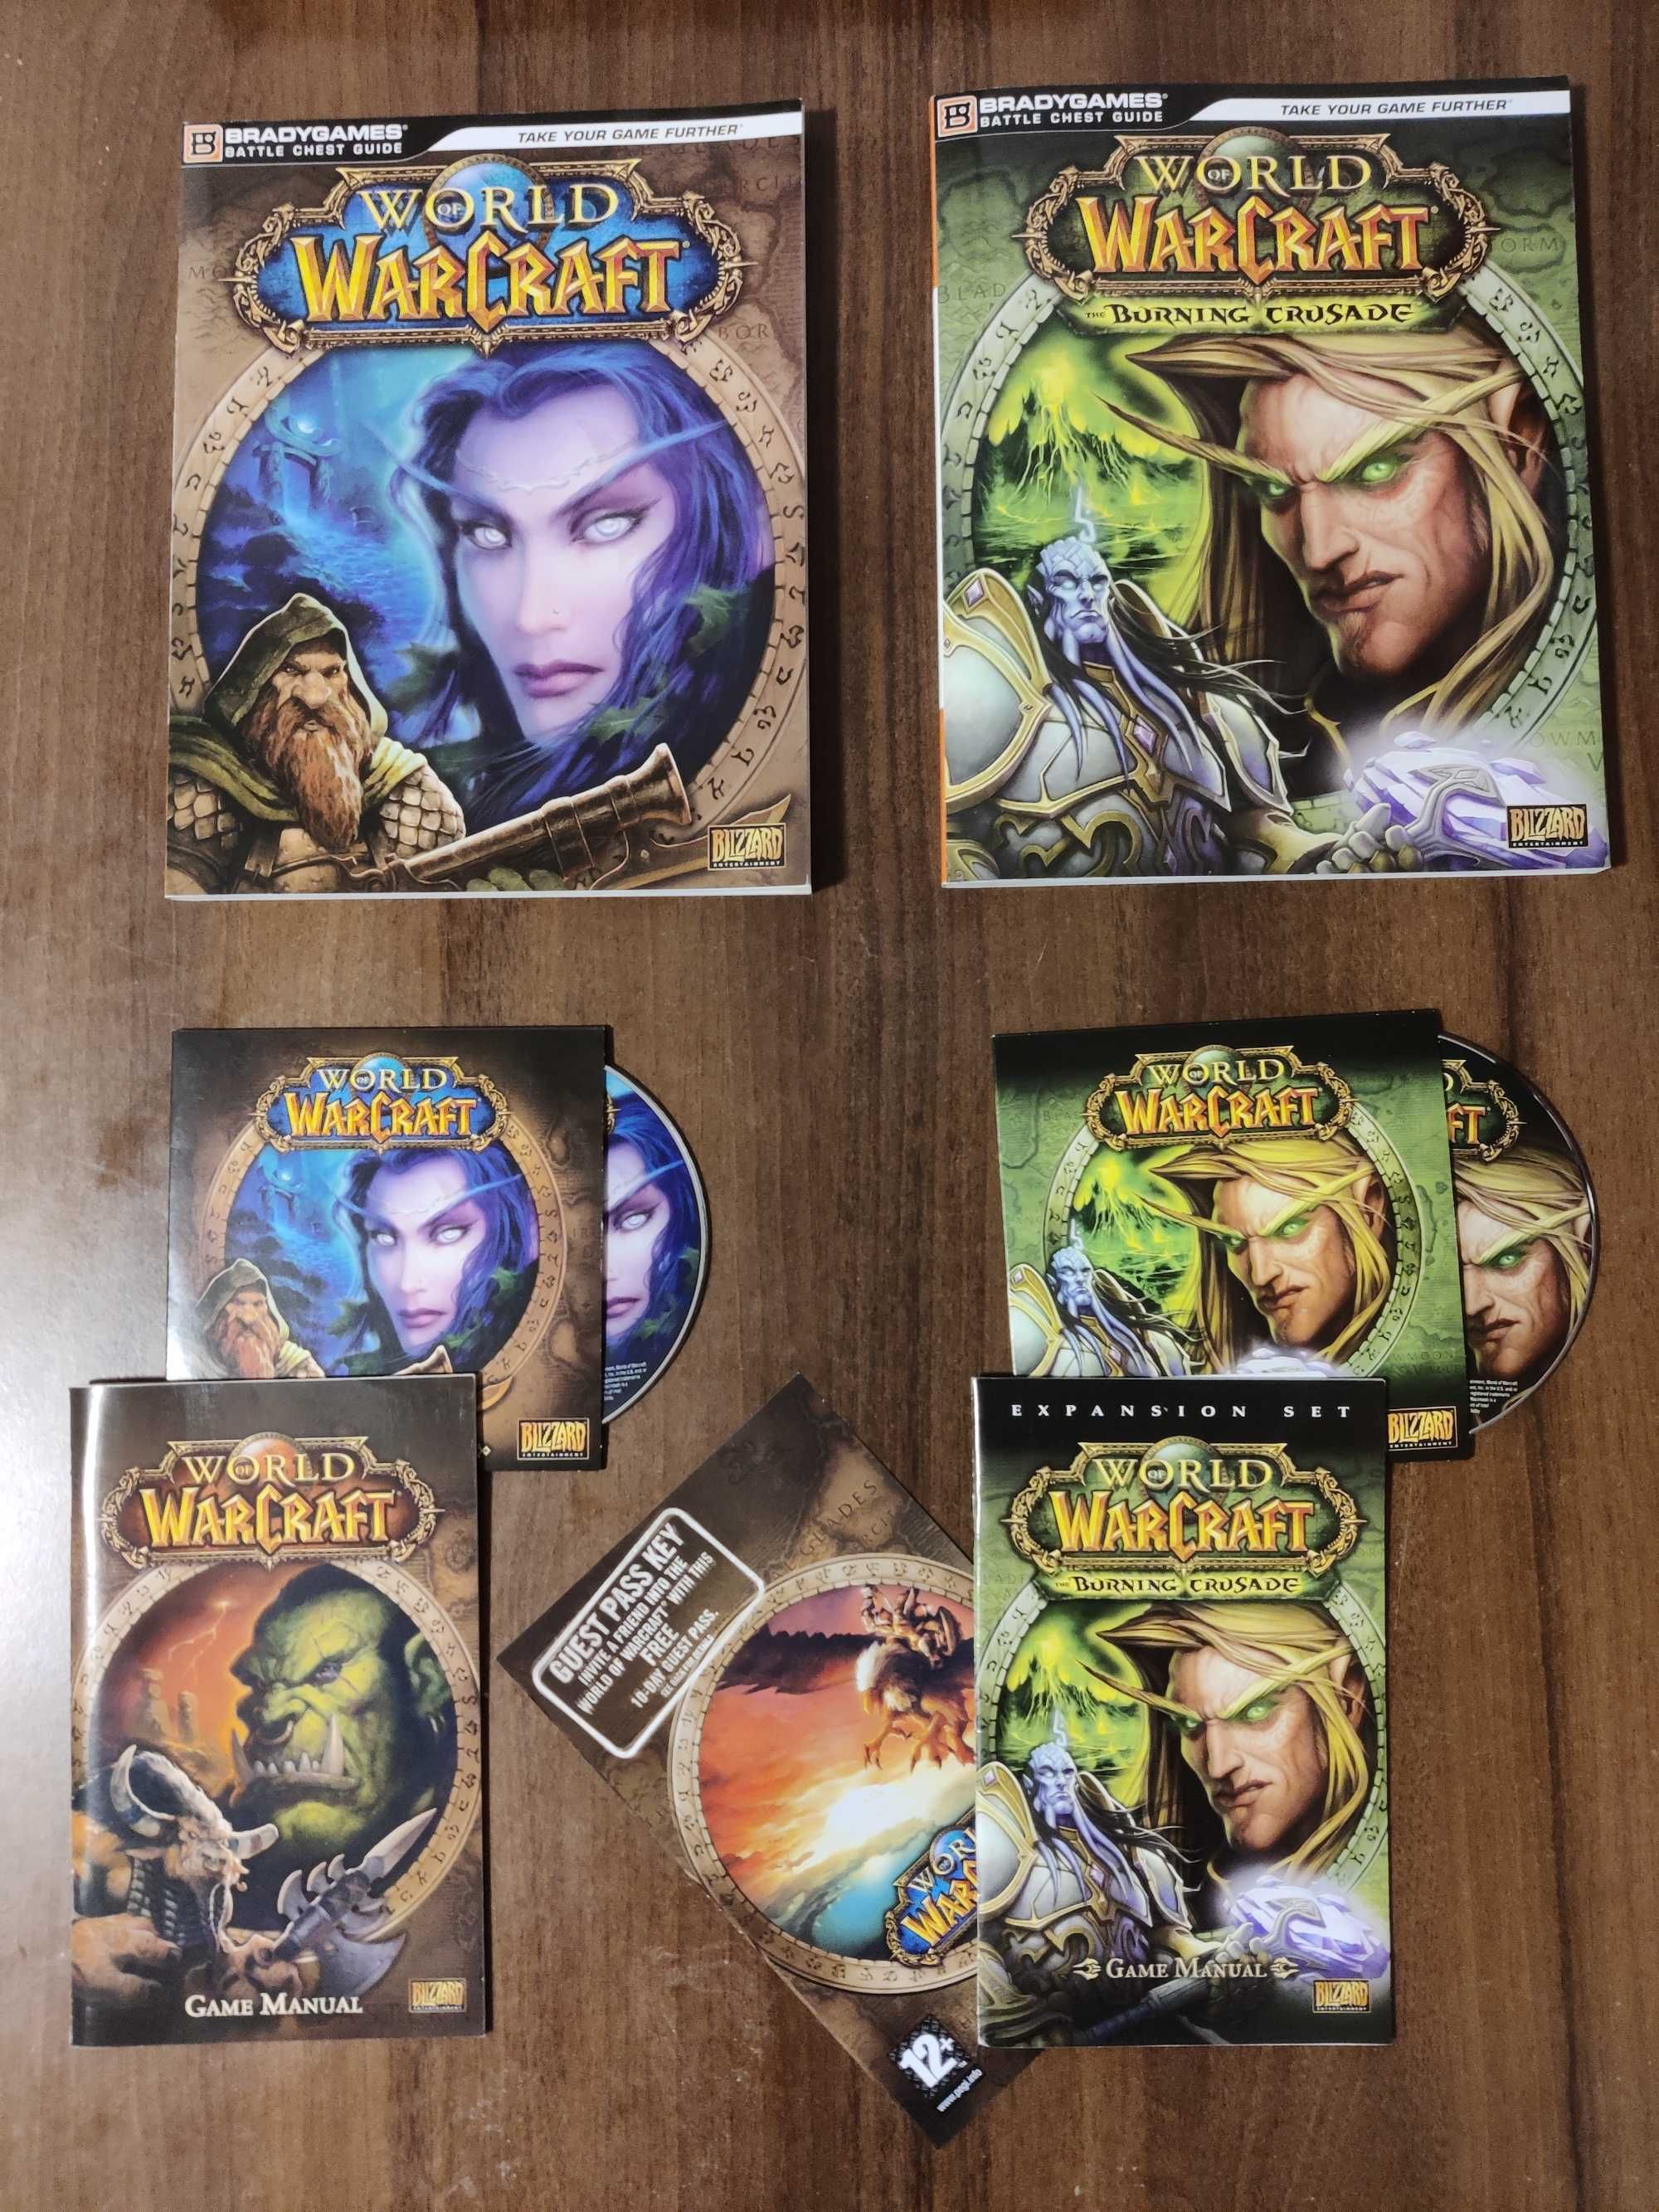 World of Warcraft Battle Chest unikatowa wersja kolekcjonerska na PC